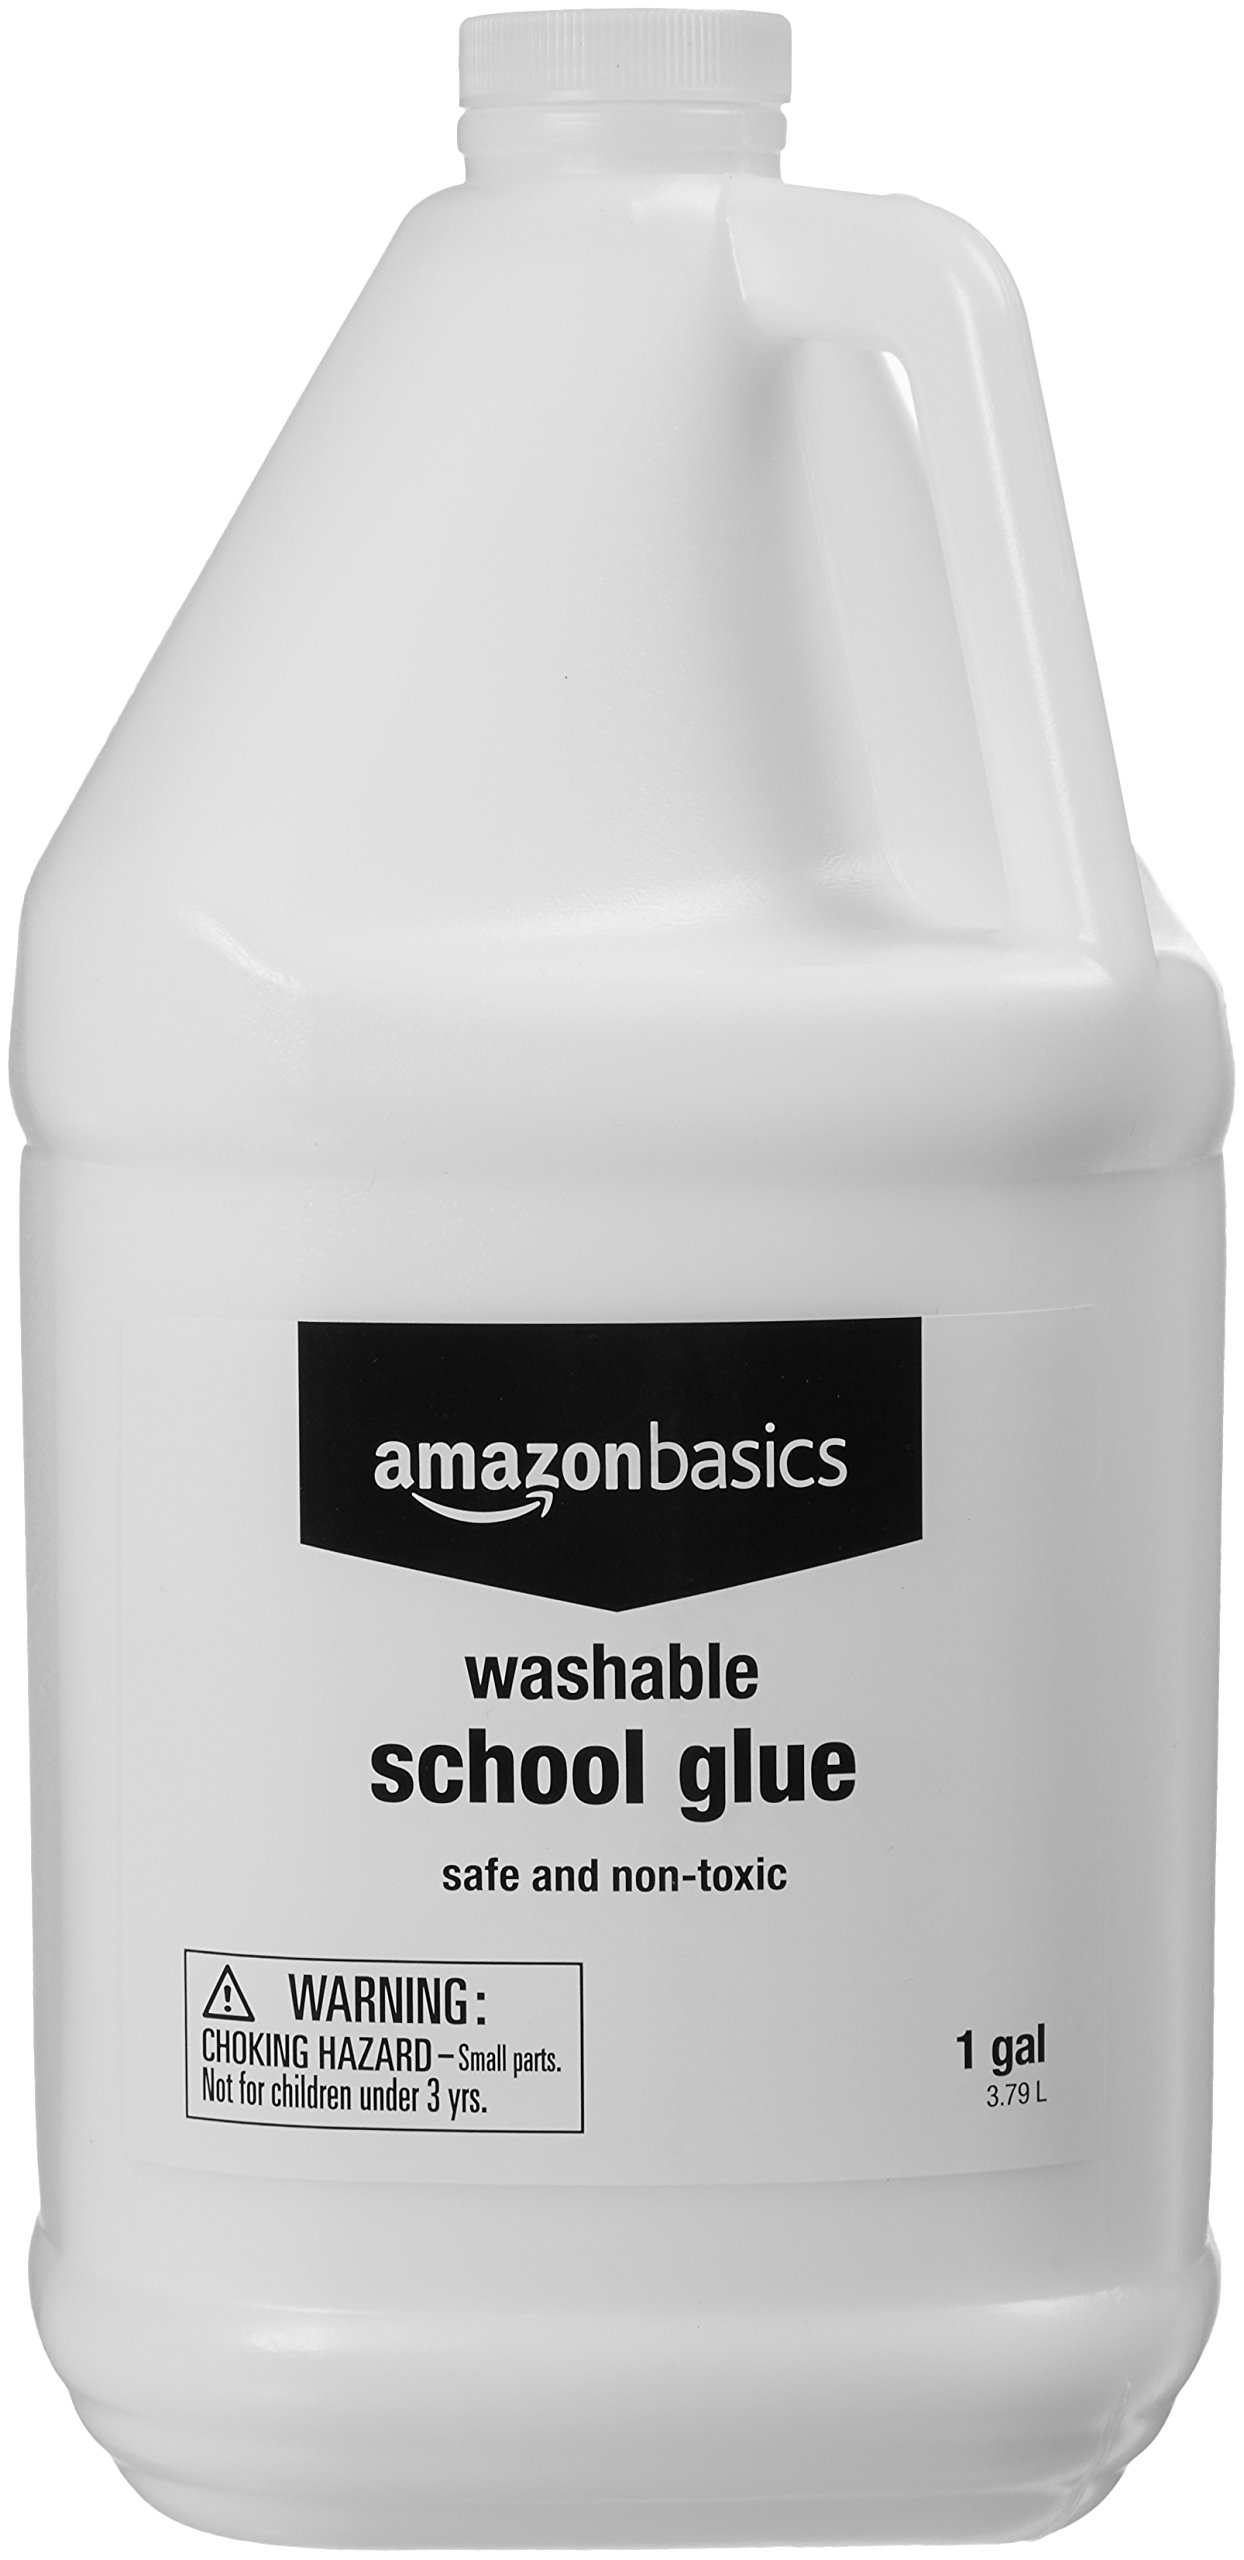 $11.43: Amazon Basics All Purpose Washable School White Liquid Glue, 1 Gallon Bottle